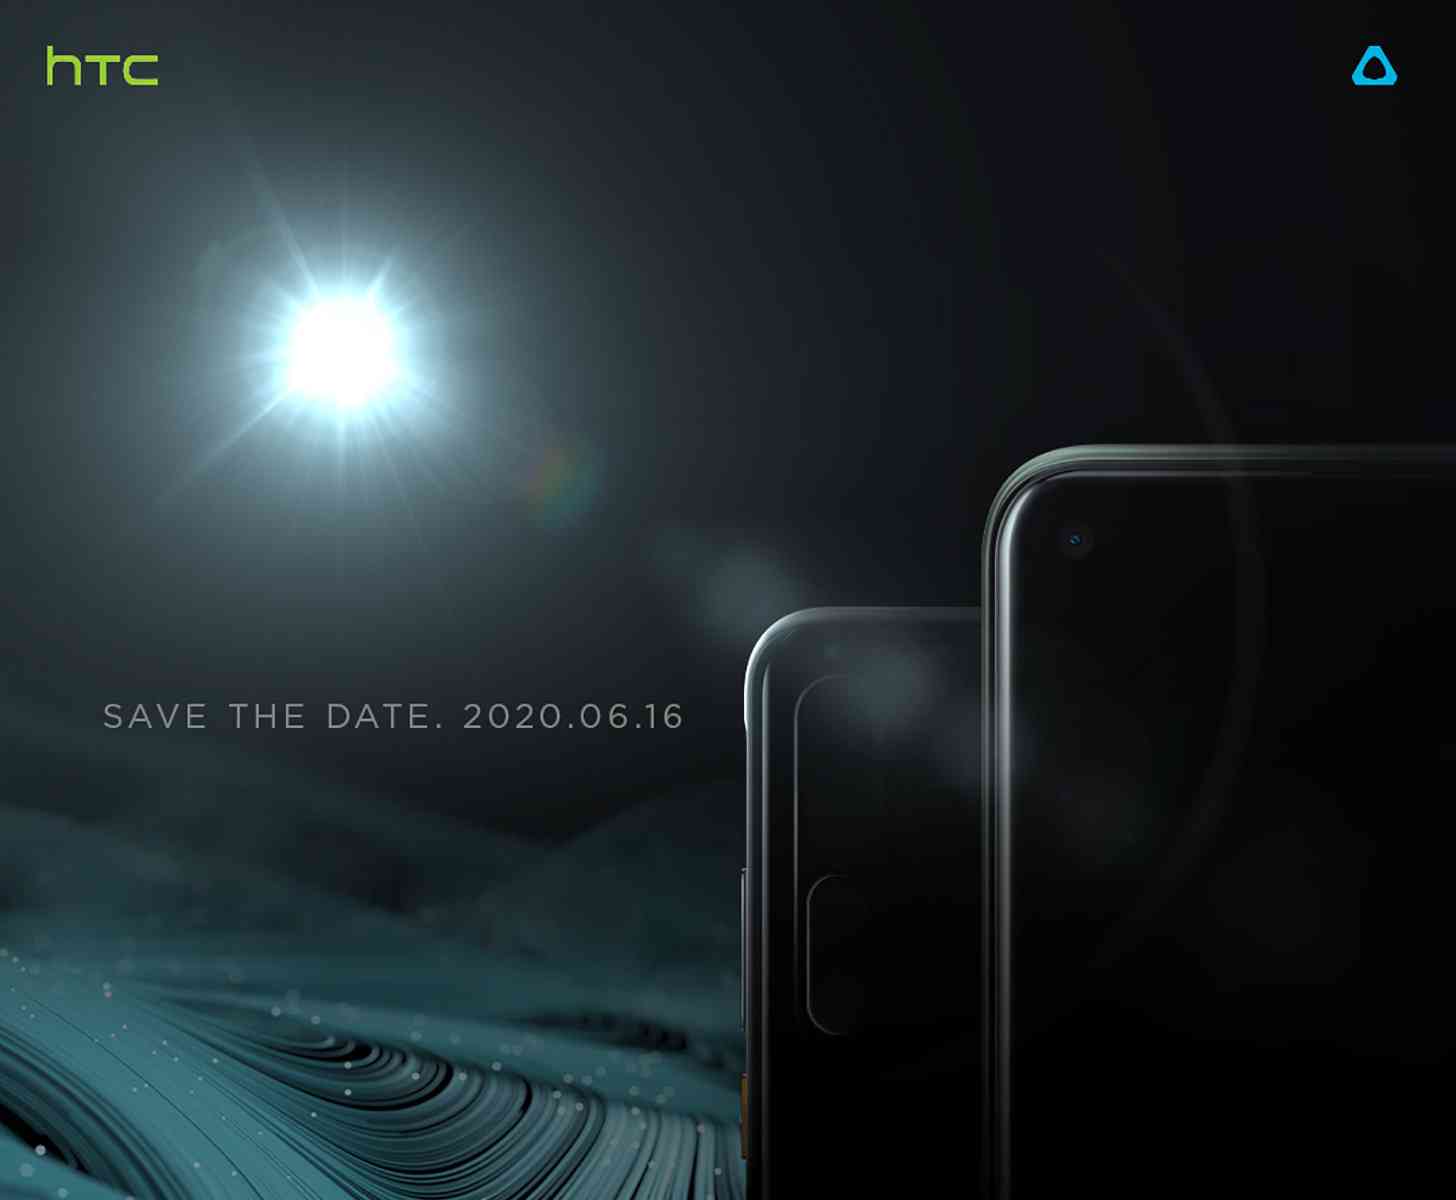 HTC Desire 20 Pro event June 16 teaser